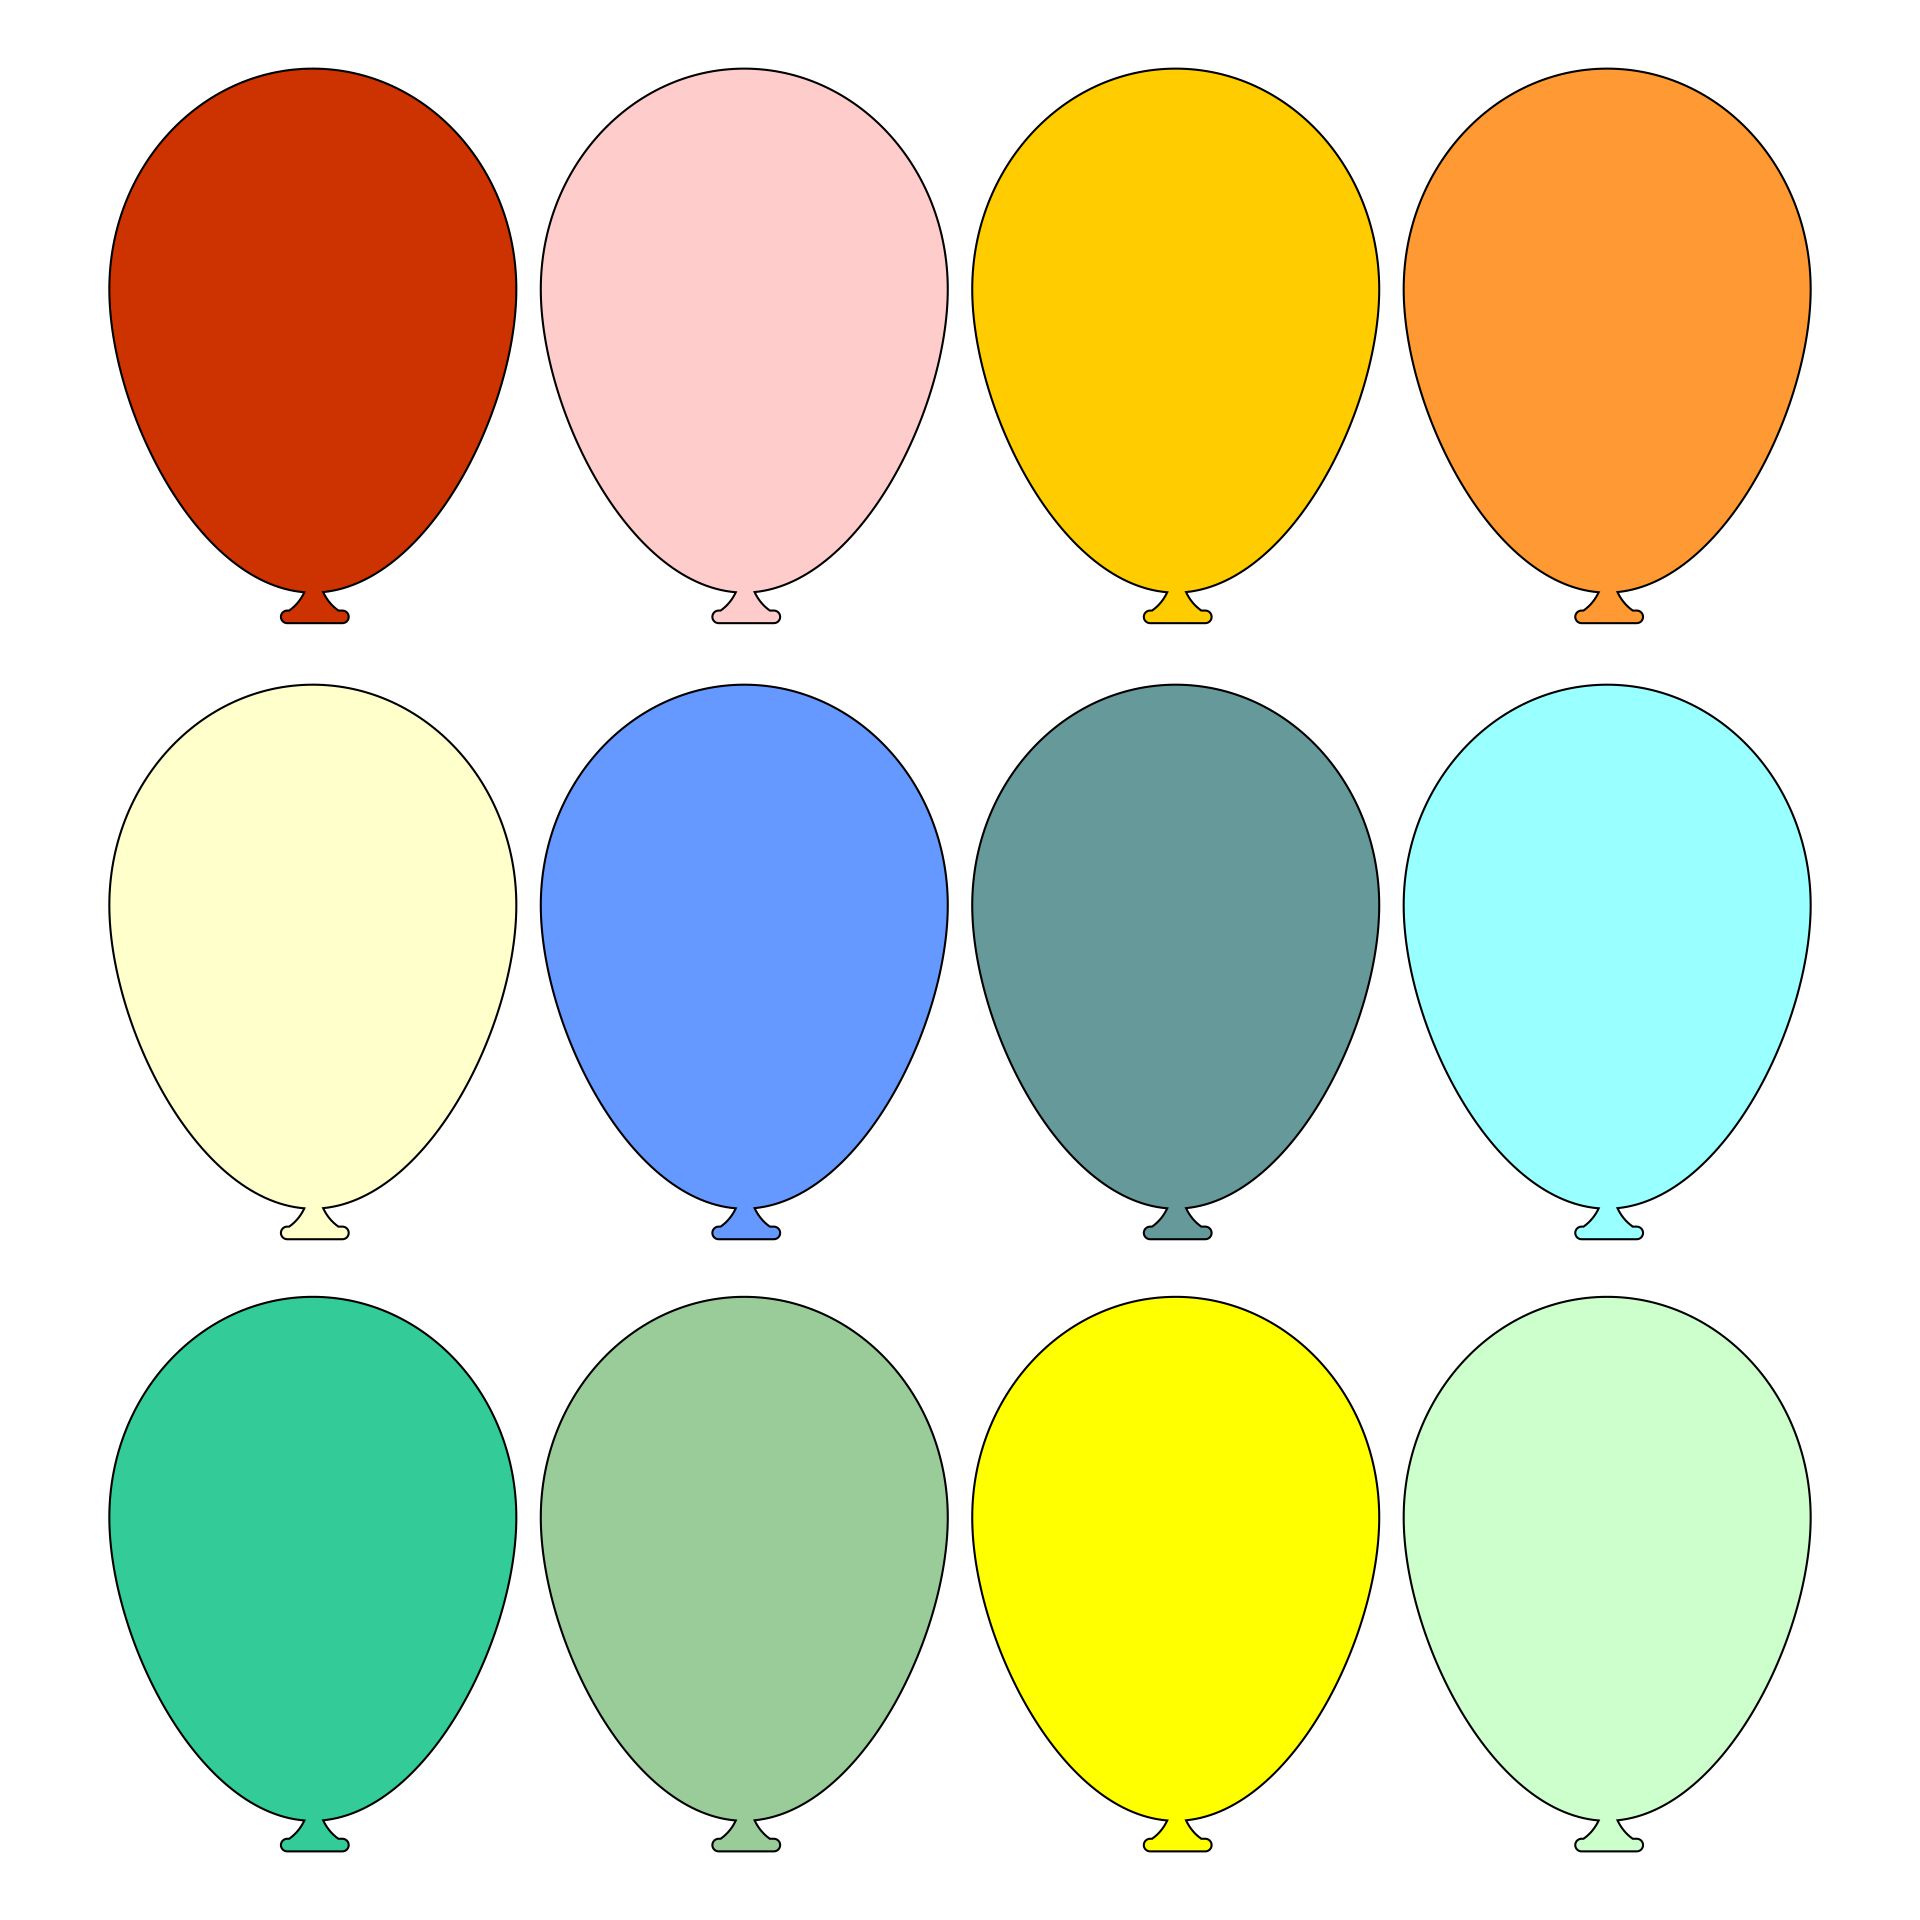 balloons-printable-printable-word-searches